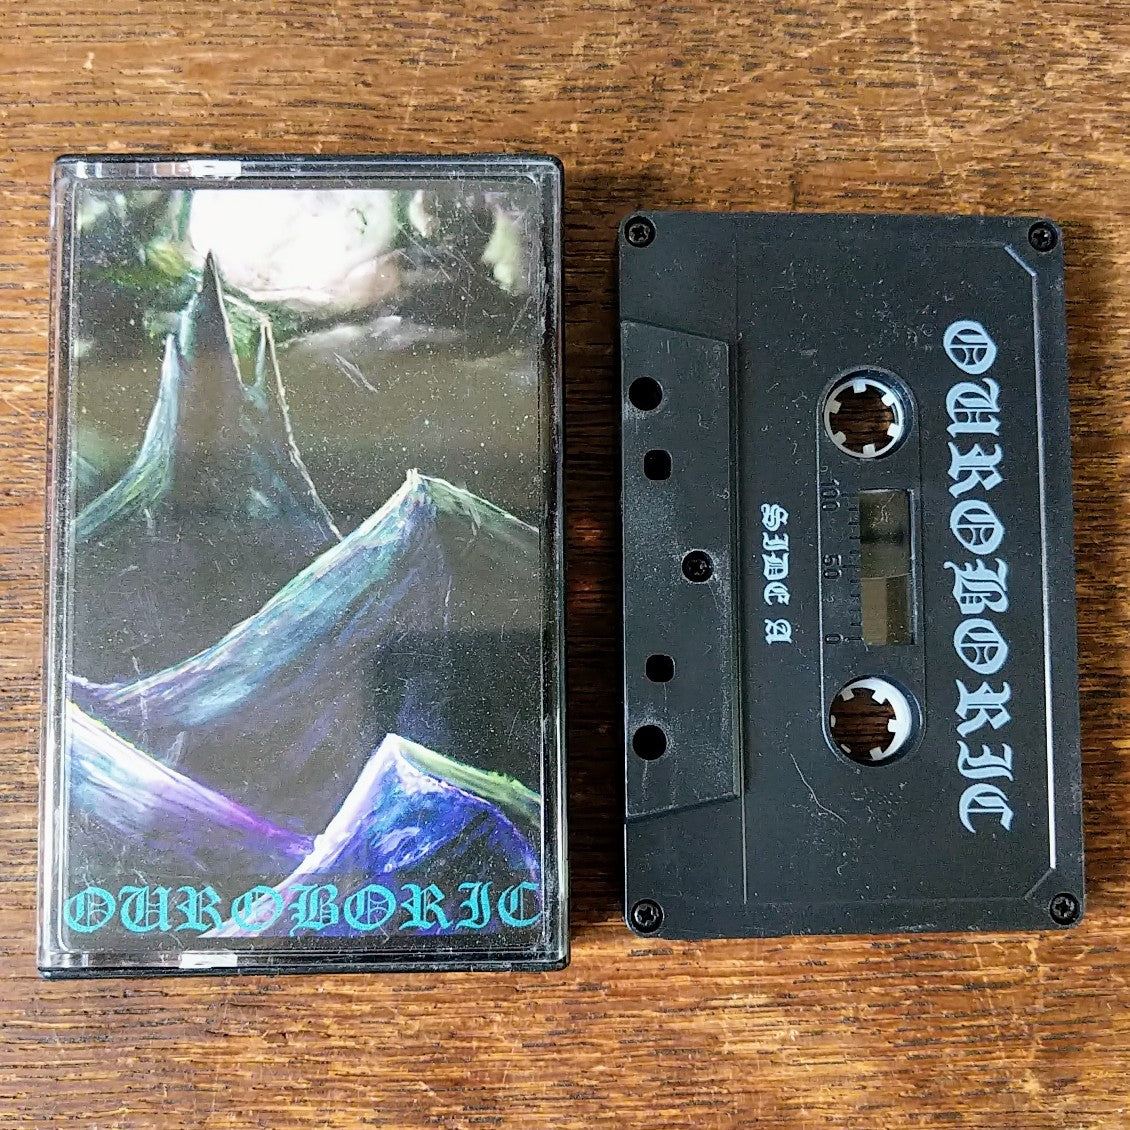 [SOLD OUT] DEAD HILLS "Ouroboric" Cassette Tape (Lim. 100, 2014)